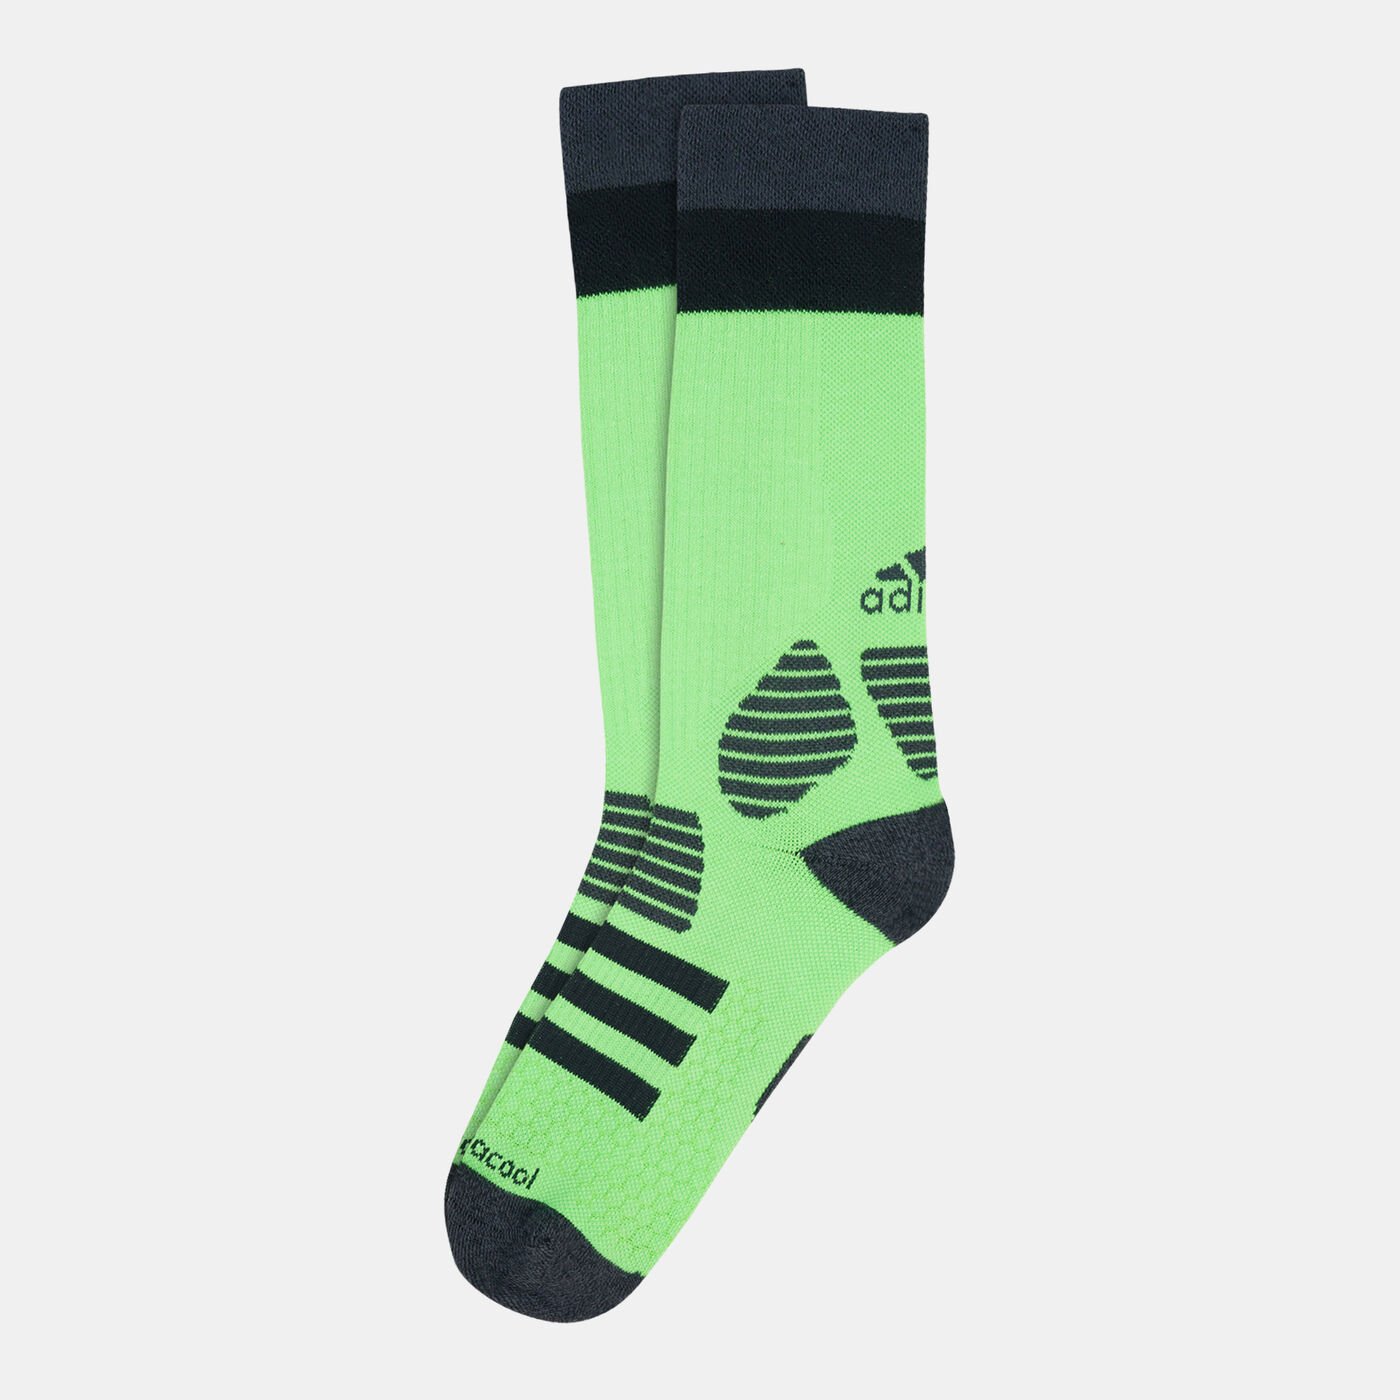 Men's Ace Socks